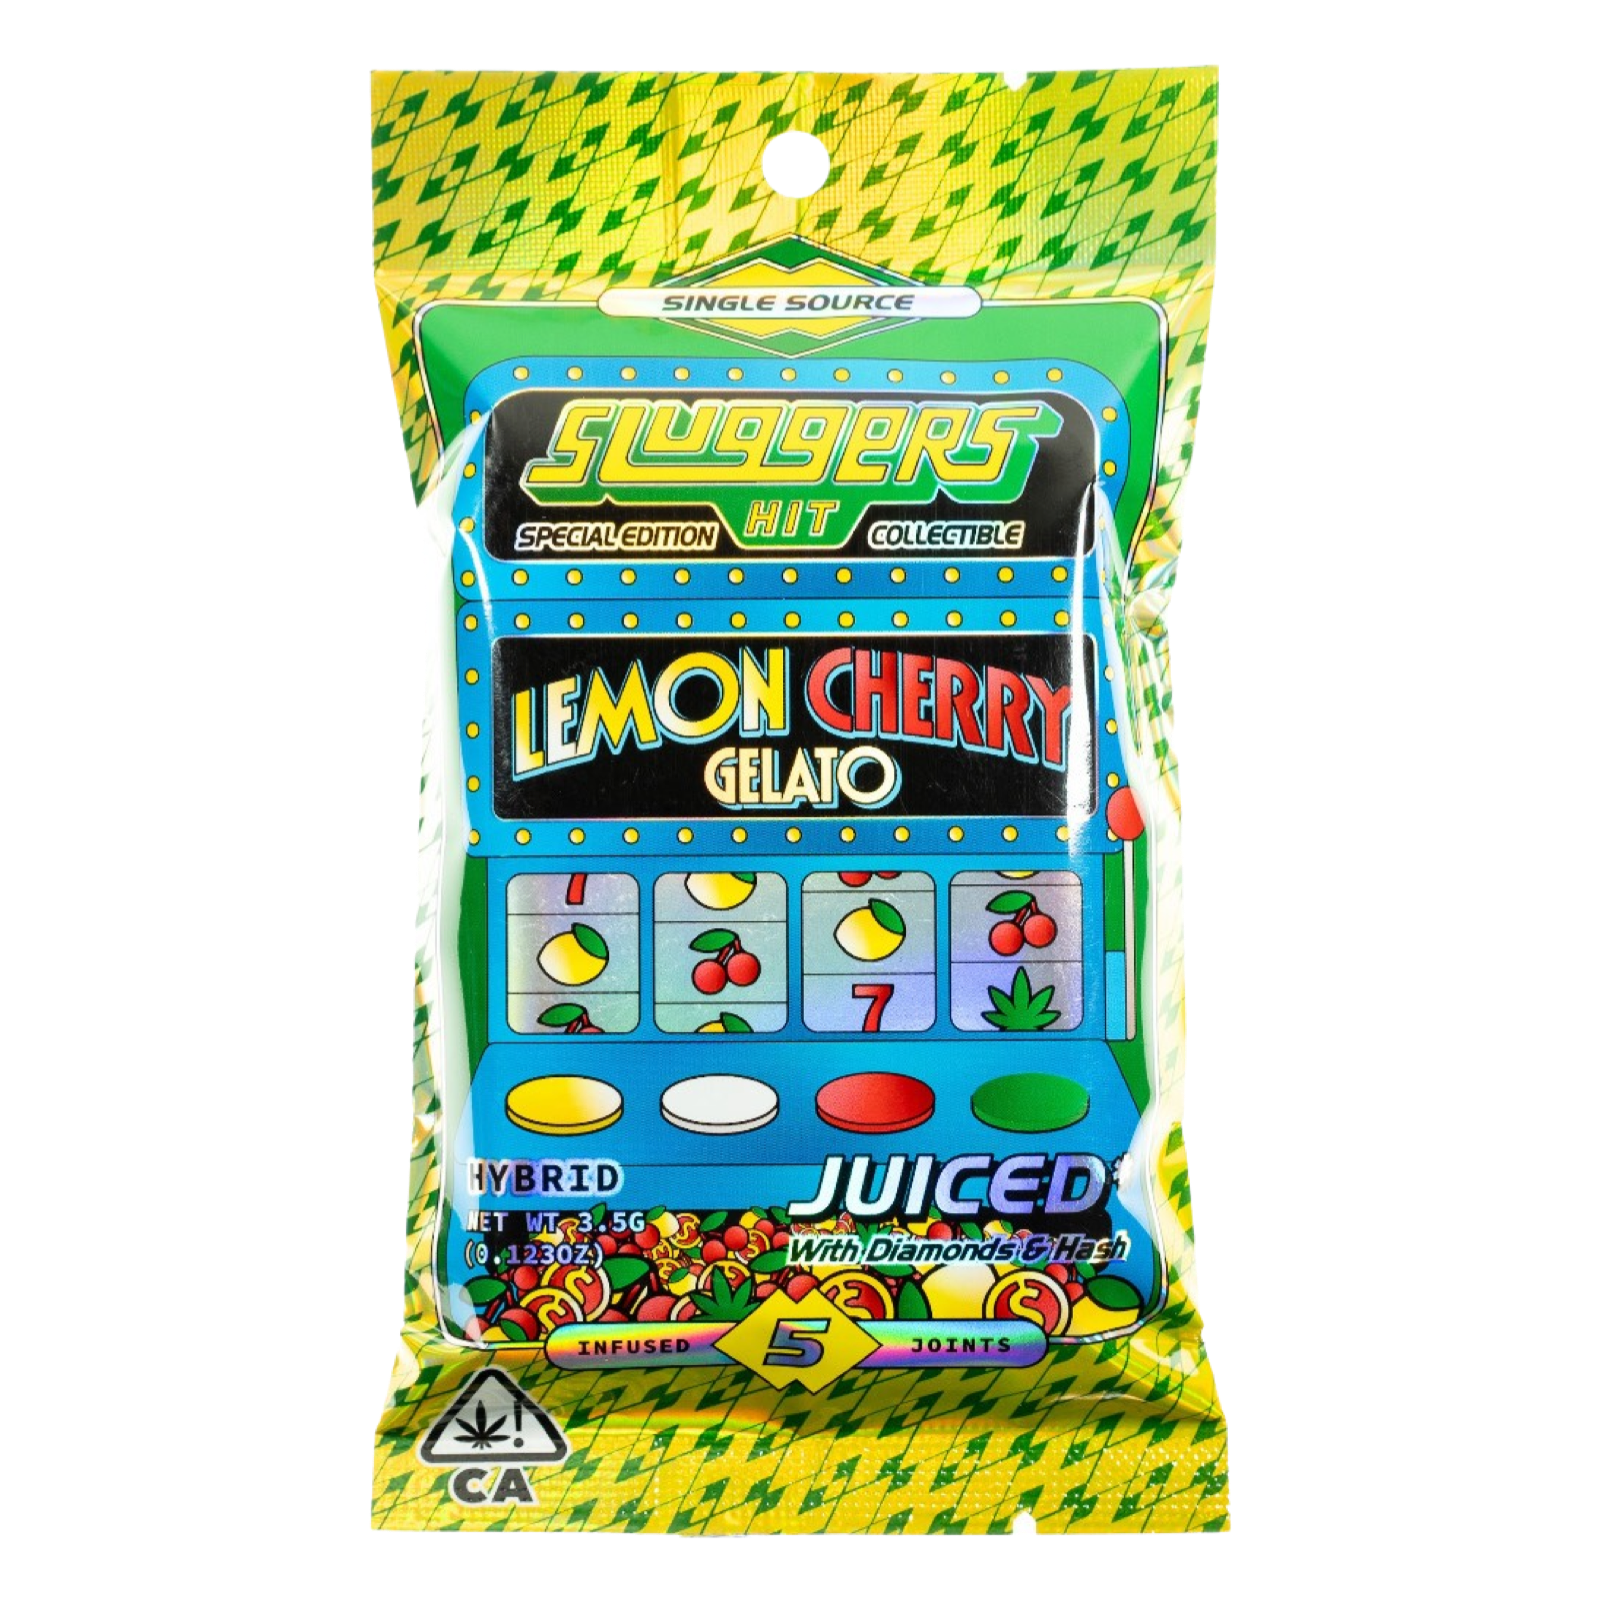 Lemon Cherry Gelato | Sluggers 5 Pack Infused Pre Roll | Hybrid | 3.5